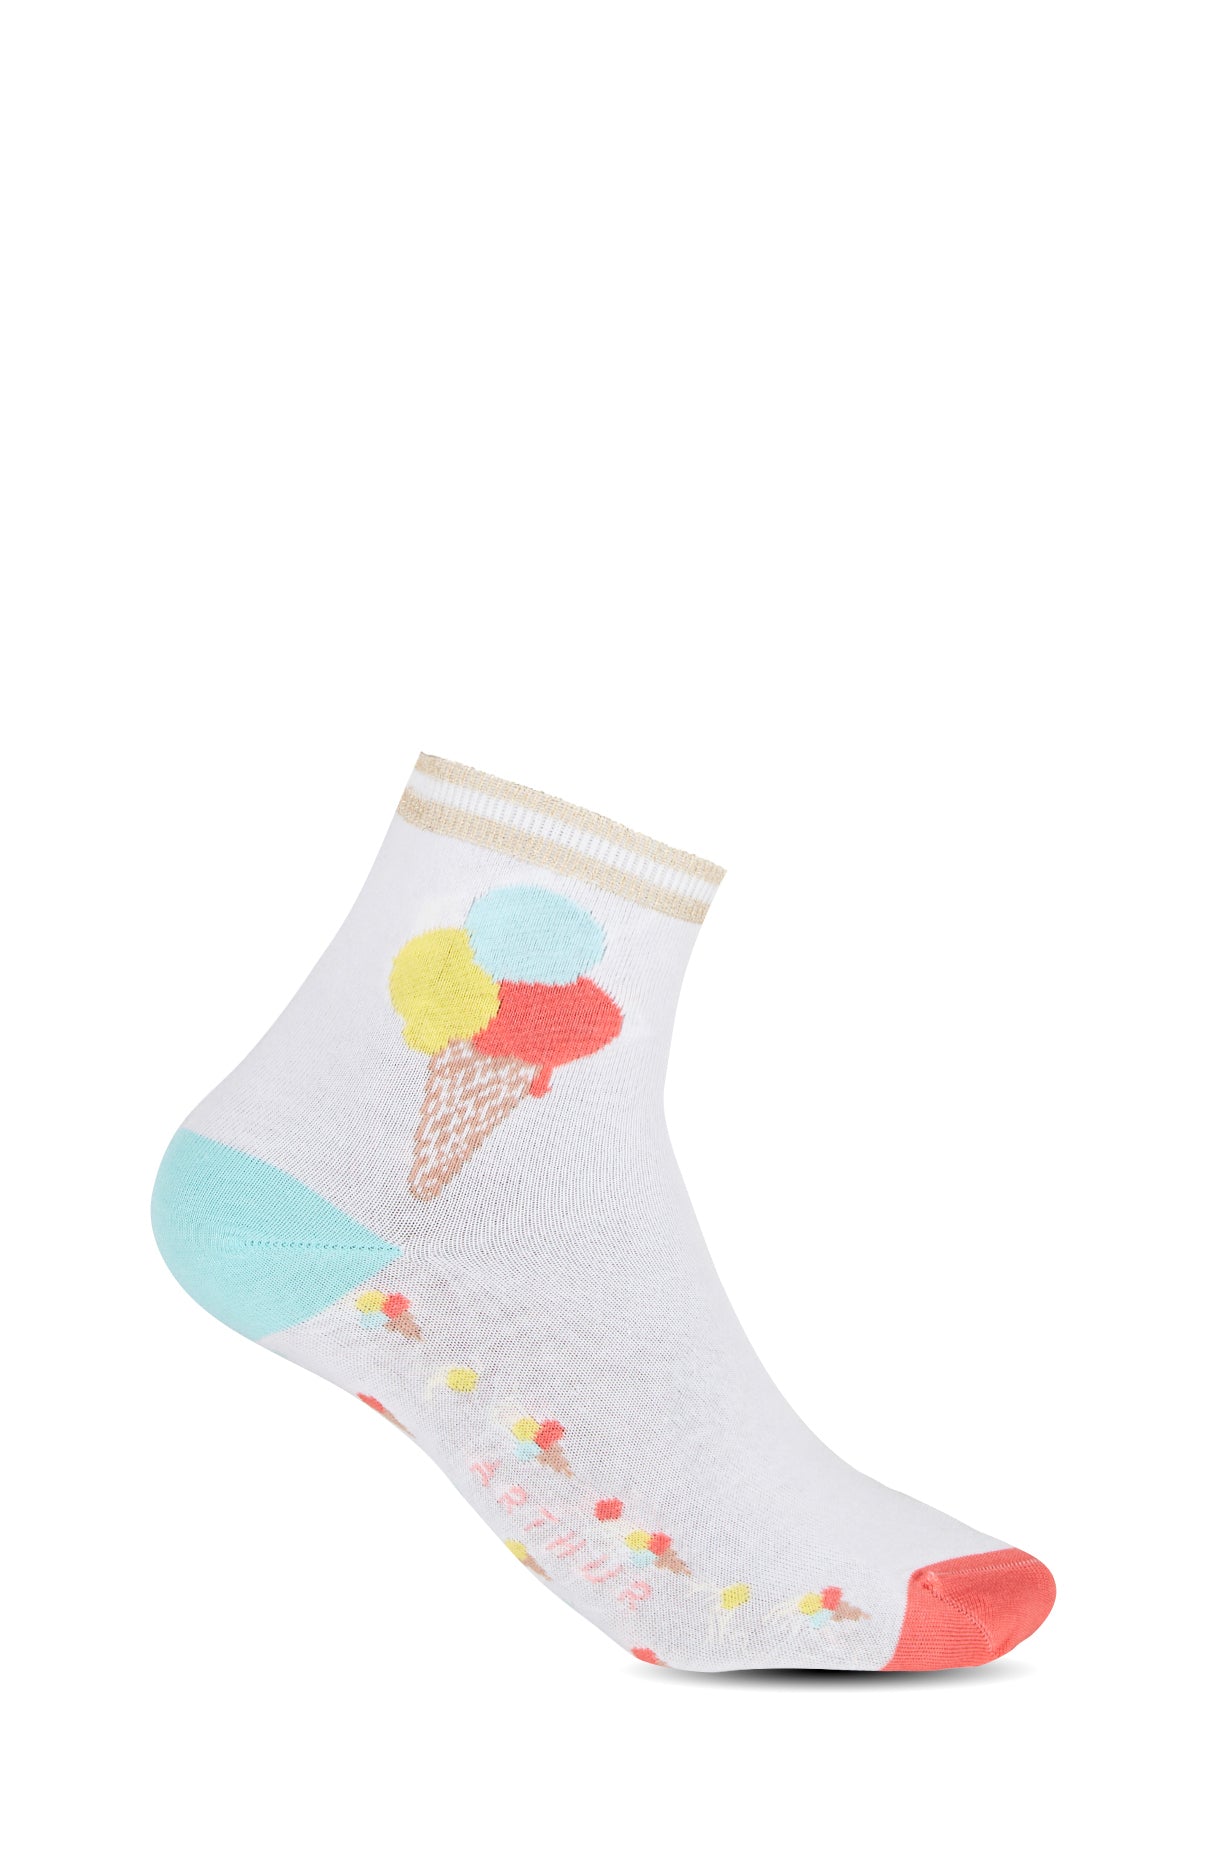 Ice cream socks